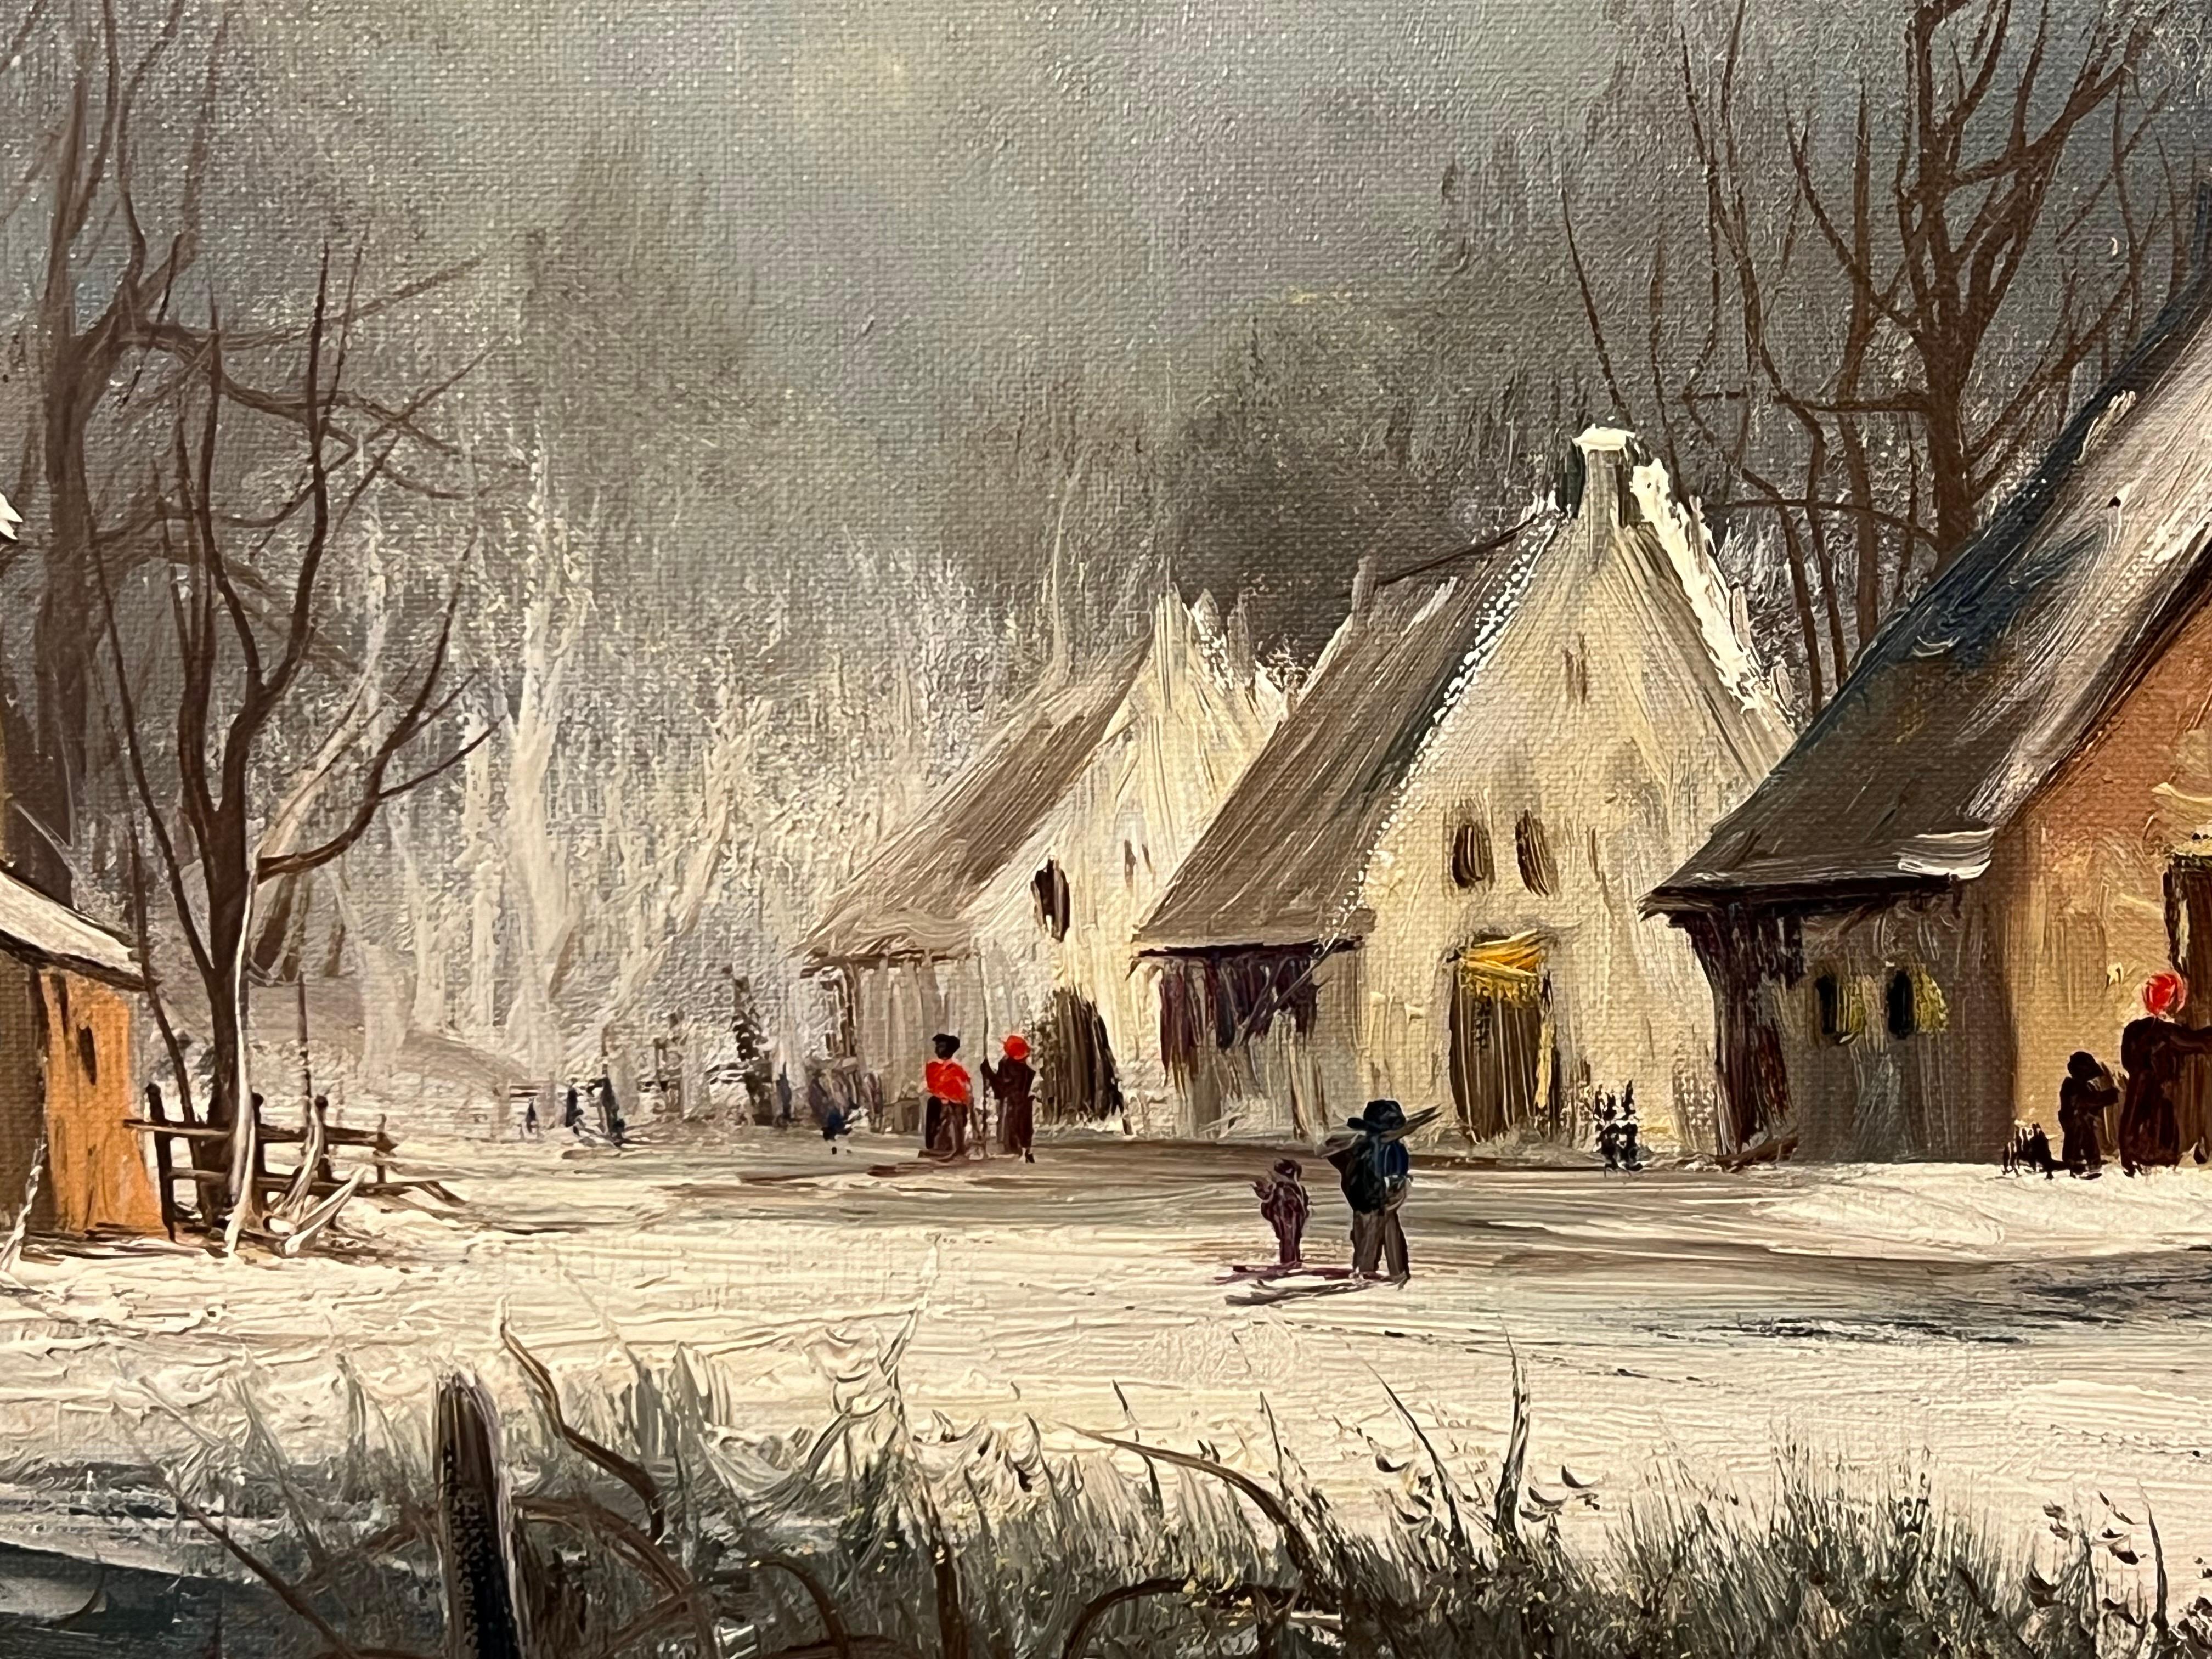 European Village in Winter Snow with Figures & Frozen Pond by German Artist For Sale 7